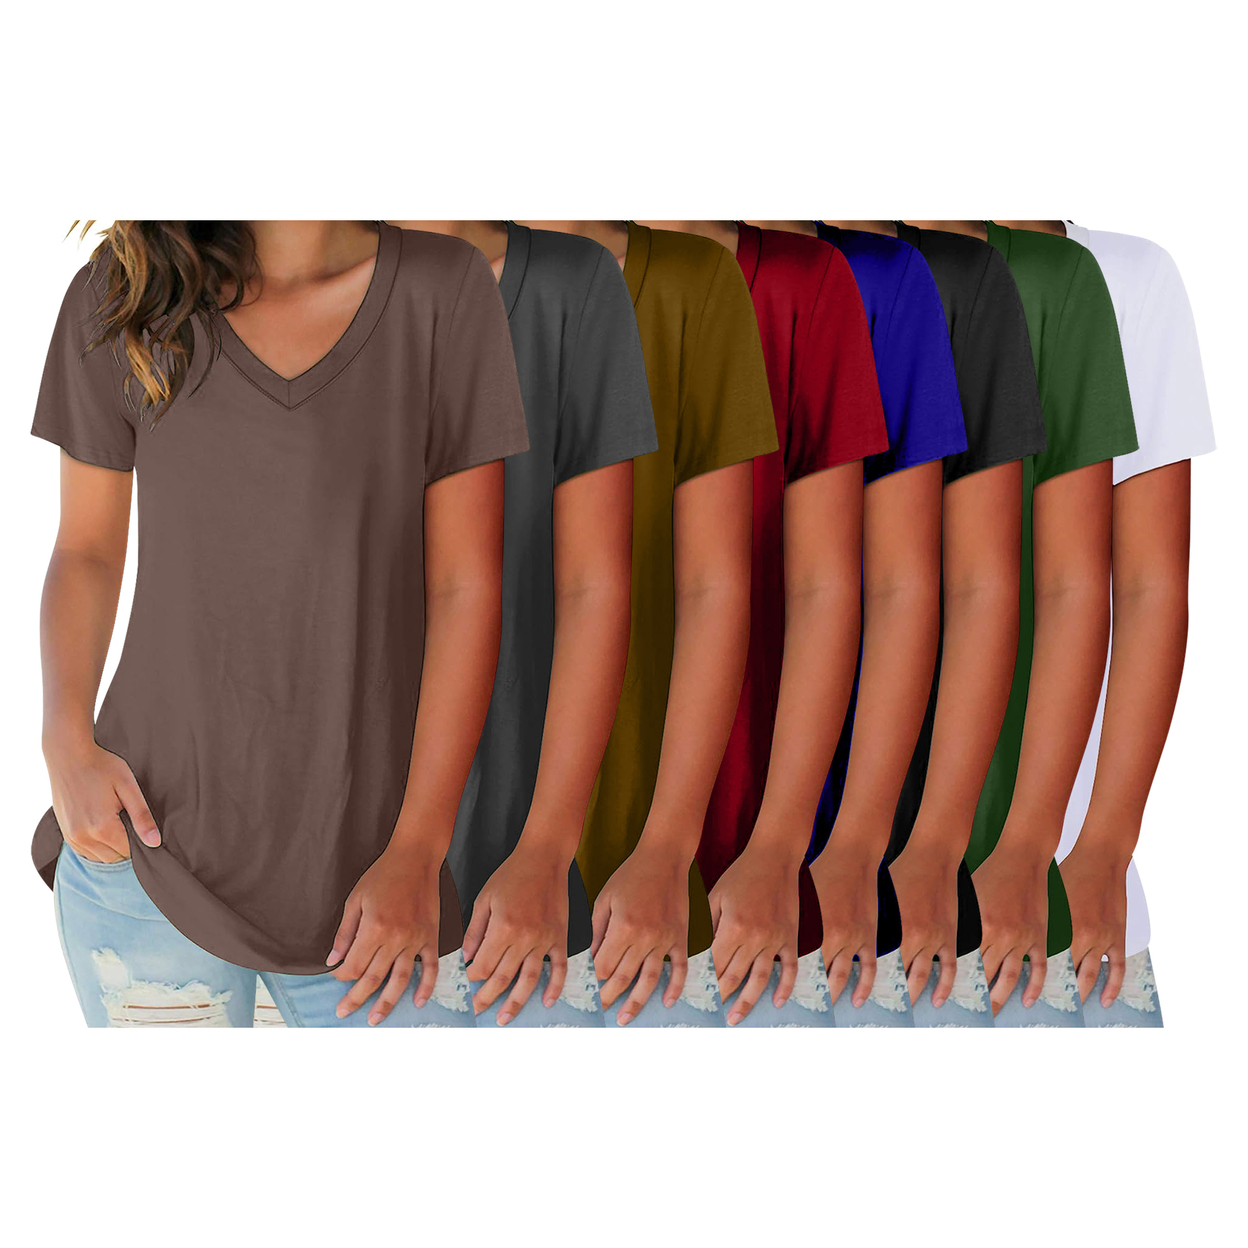 2-Pack: Women's Ultra Soft Smooth Cotton Blend Basic V-Neck Short Sleeve Shirts - Black & Green, Xx-large